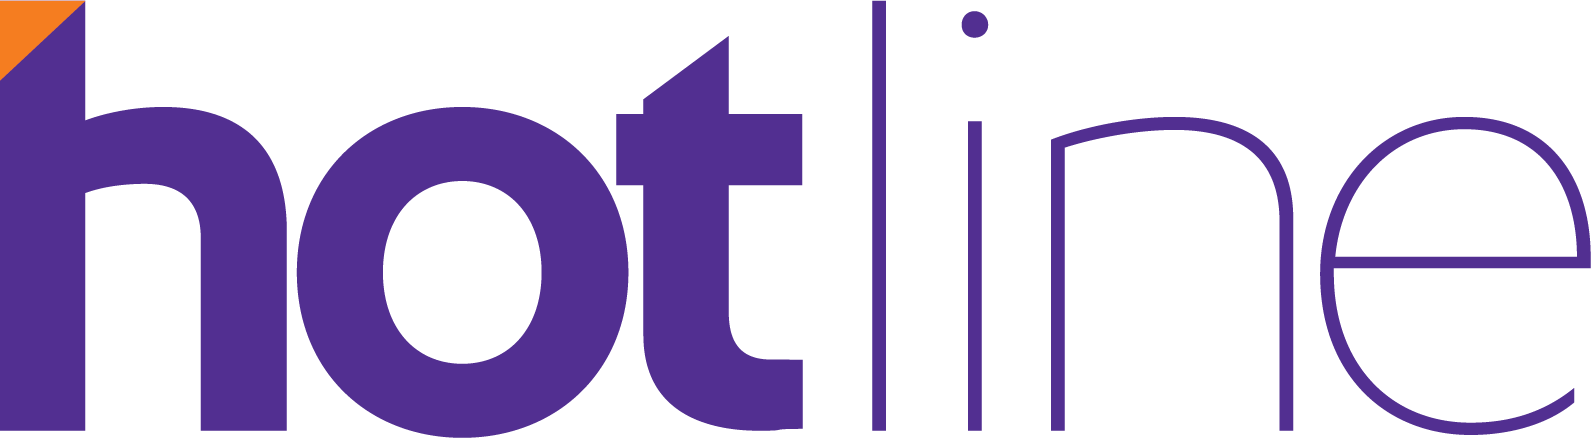 Hotline-logo